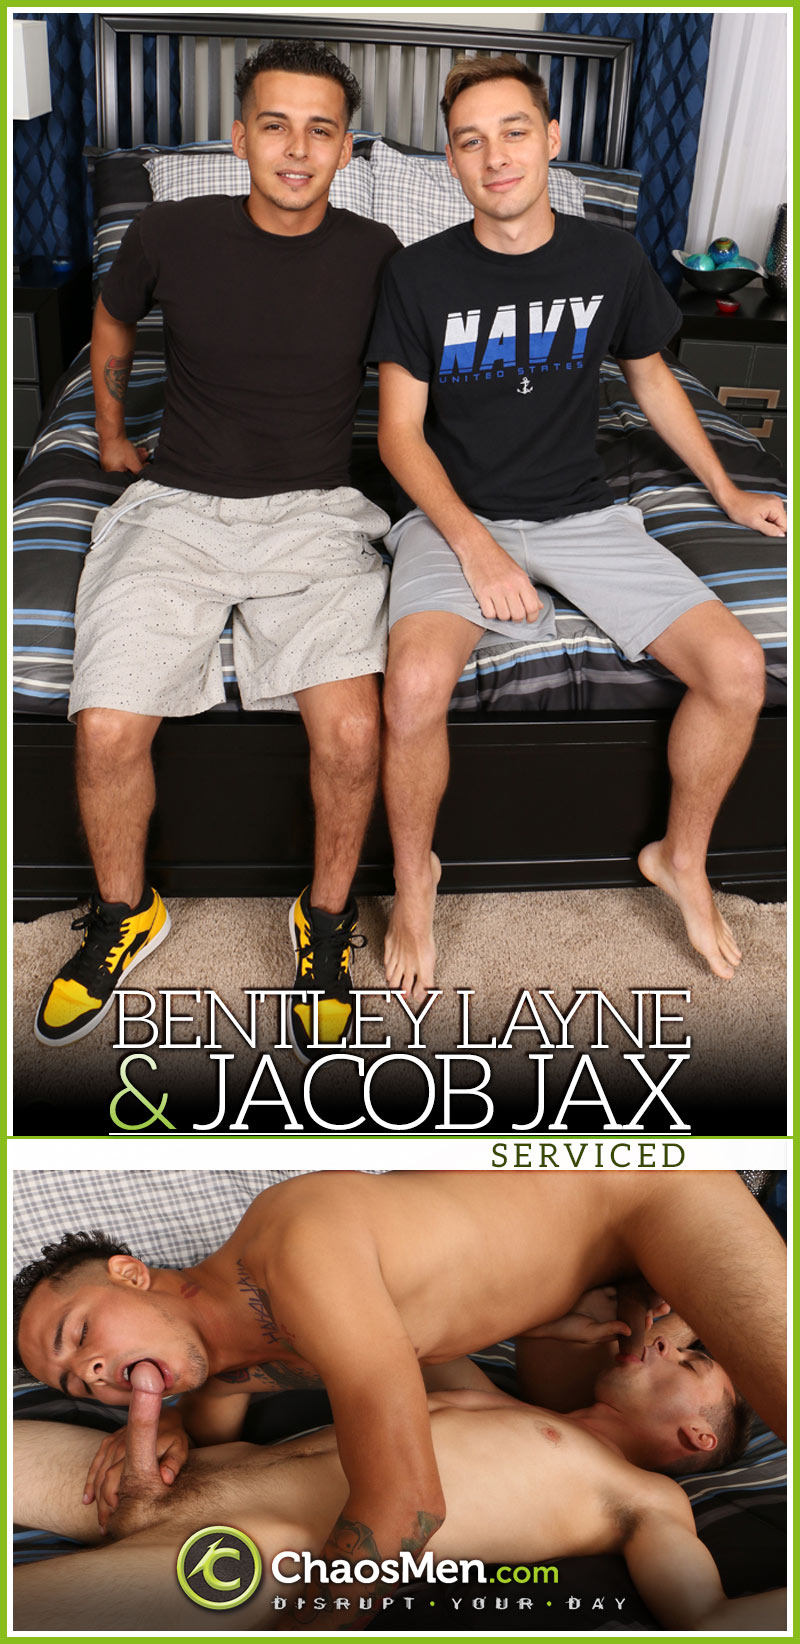 Bentley Layne & Jacob Jax 'Serviced' at ChaosMen